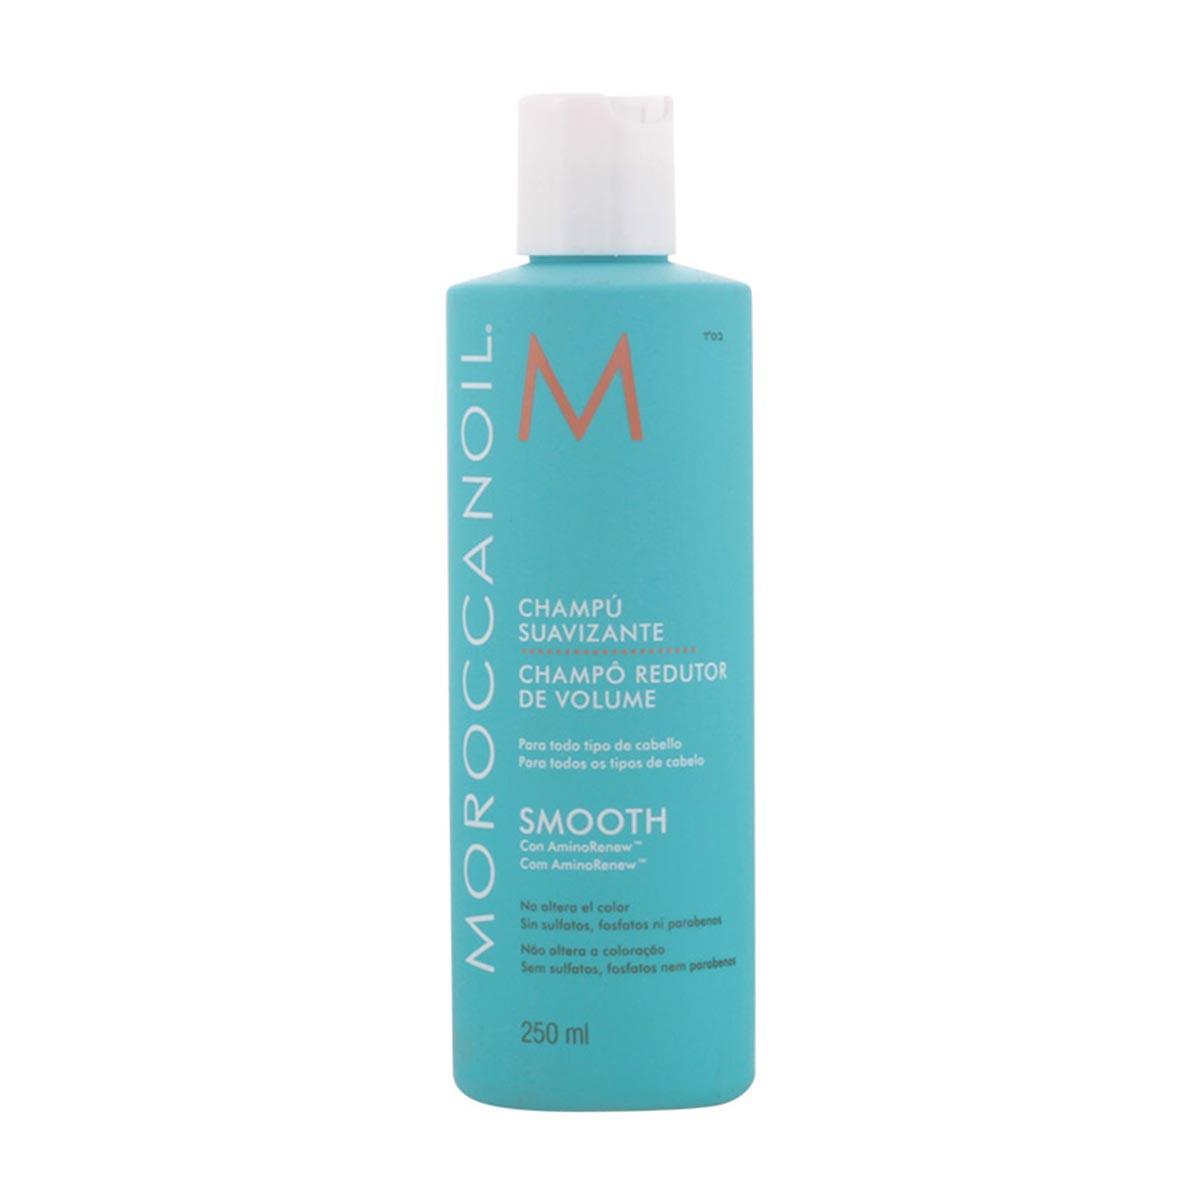 moroccanoil-shampoo-smooth-250ml